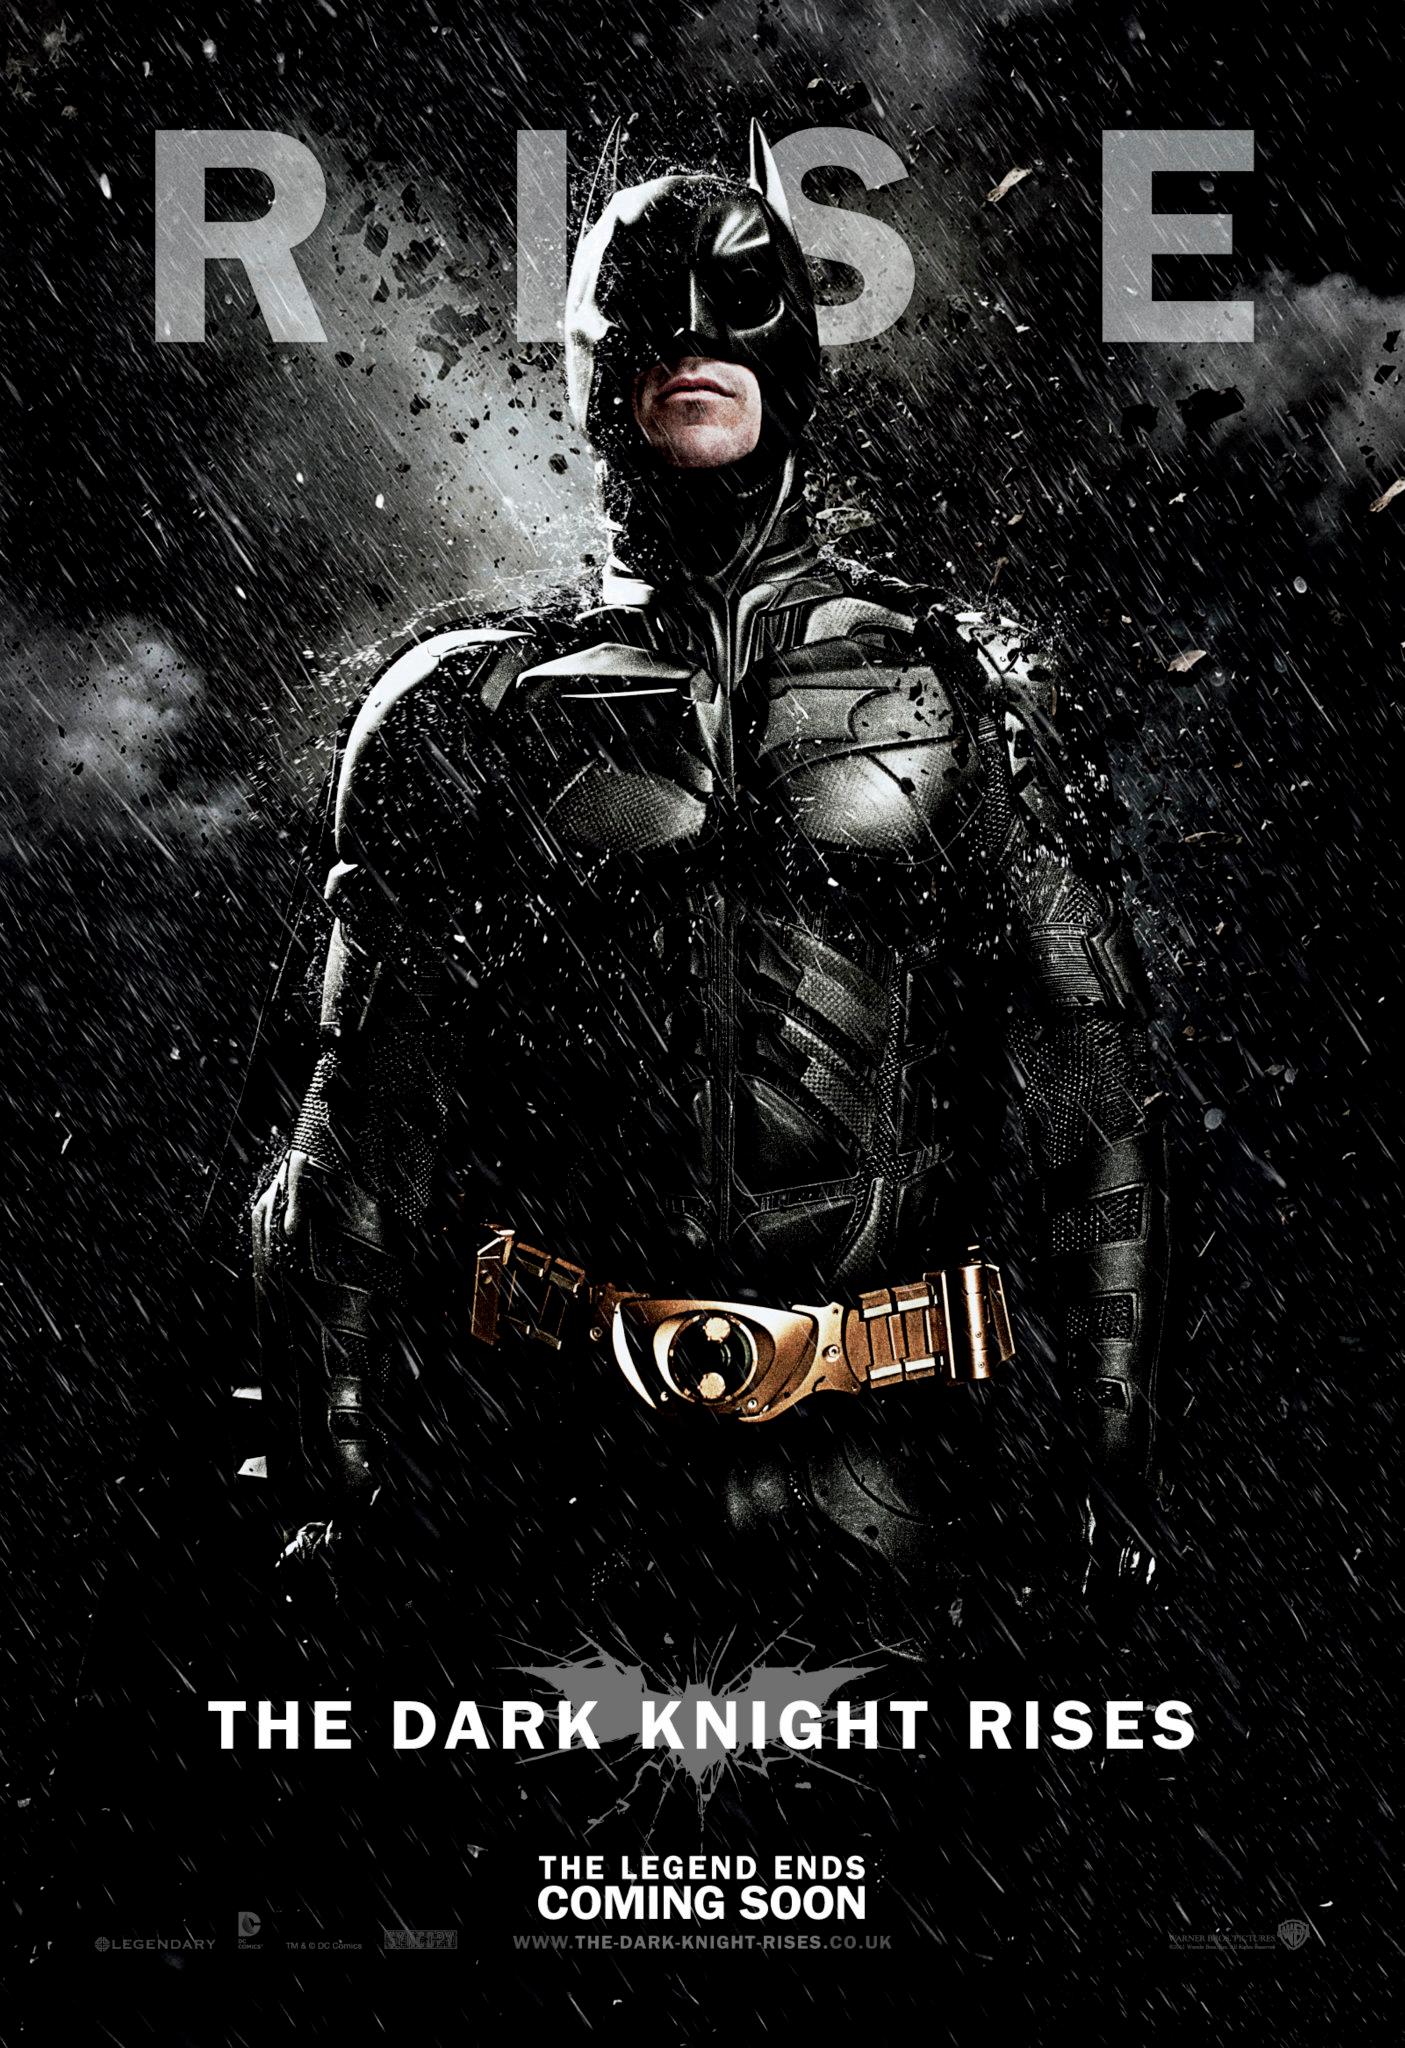 The Batman Official Poster Wallpapers - Wallpaper Cave